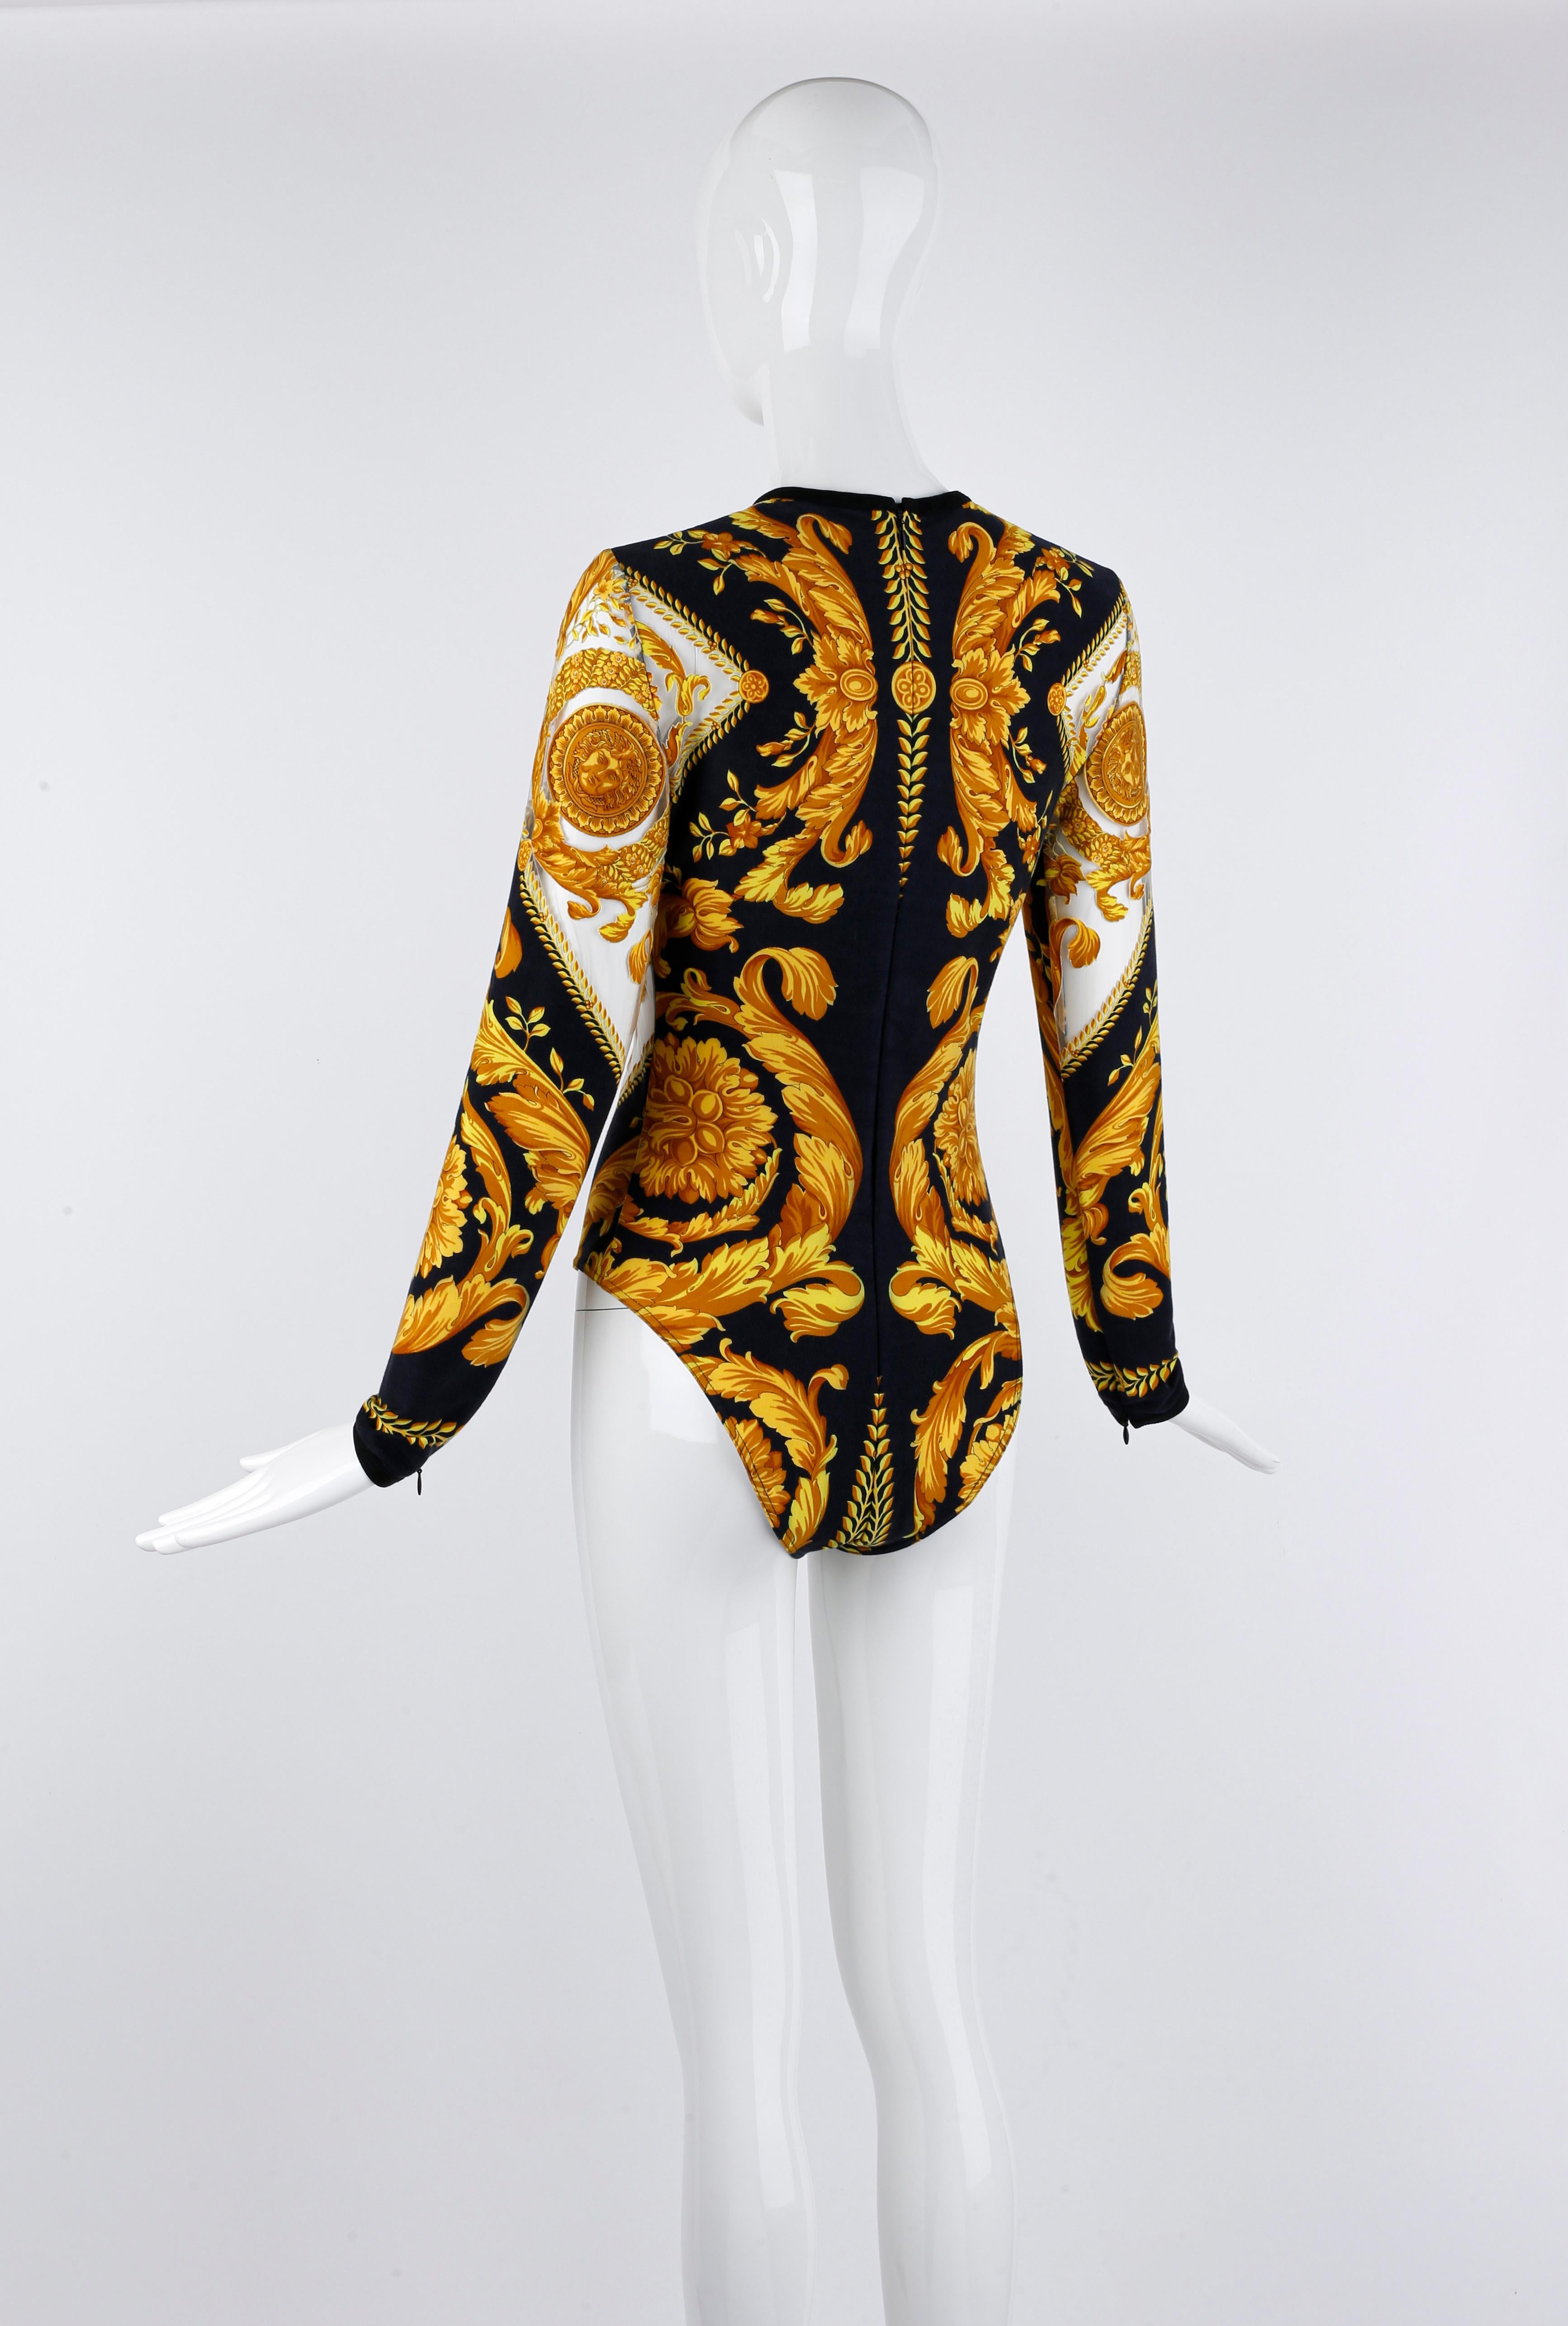 Gianni Versace S/S 1994 Signature Baroque Print Sheer Mesh Illusion Bodysuit  For Sale 1